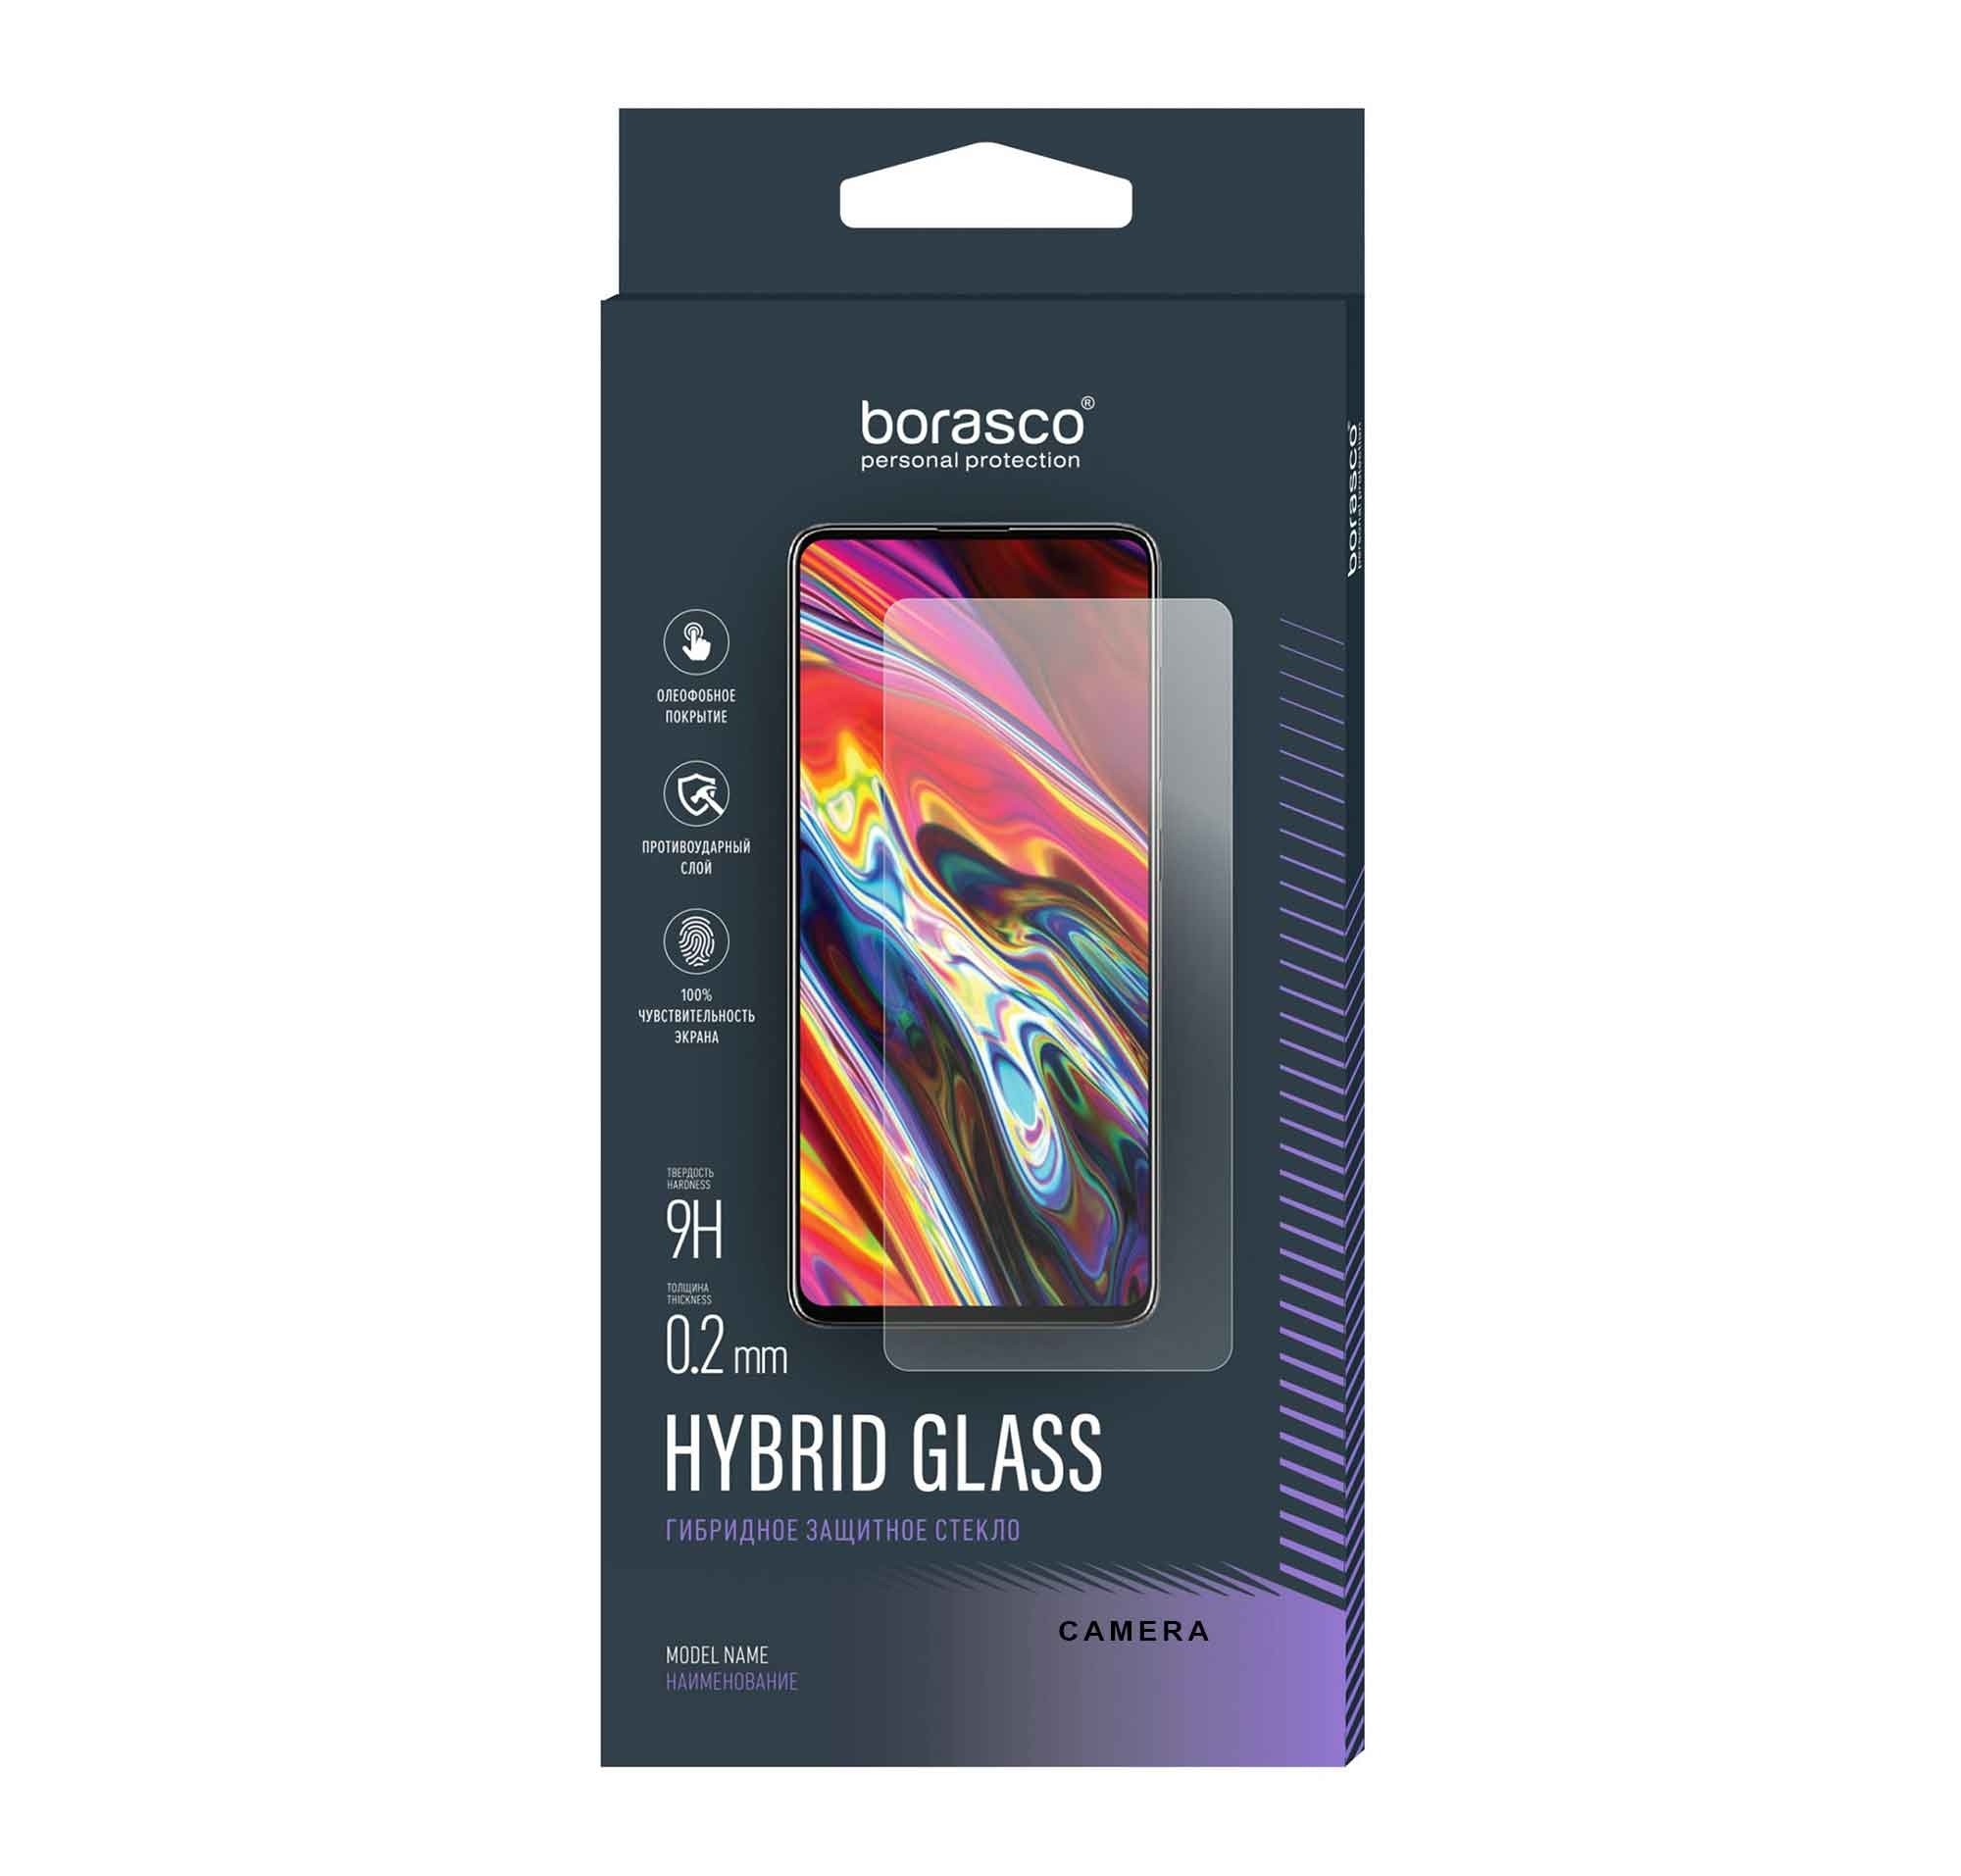 Защитное стекло (Экран+Камера) BoraSCO Hybrid Glass для ITEL Vision 3 защитное стекло borasco 0 26 mm для itel vision 3